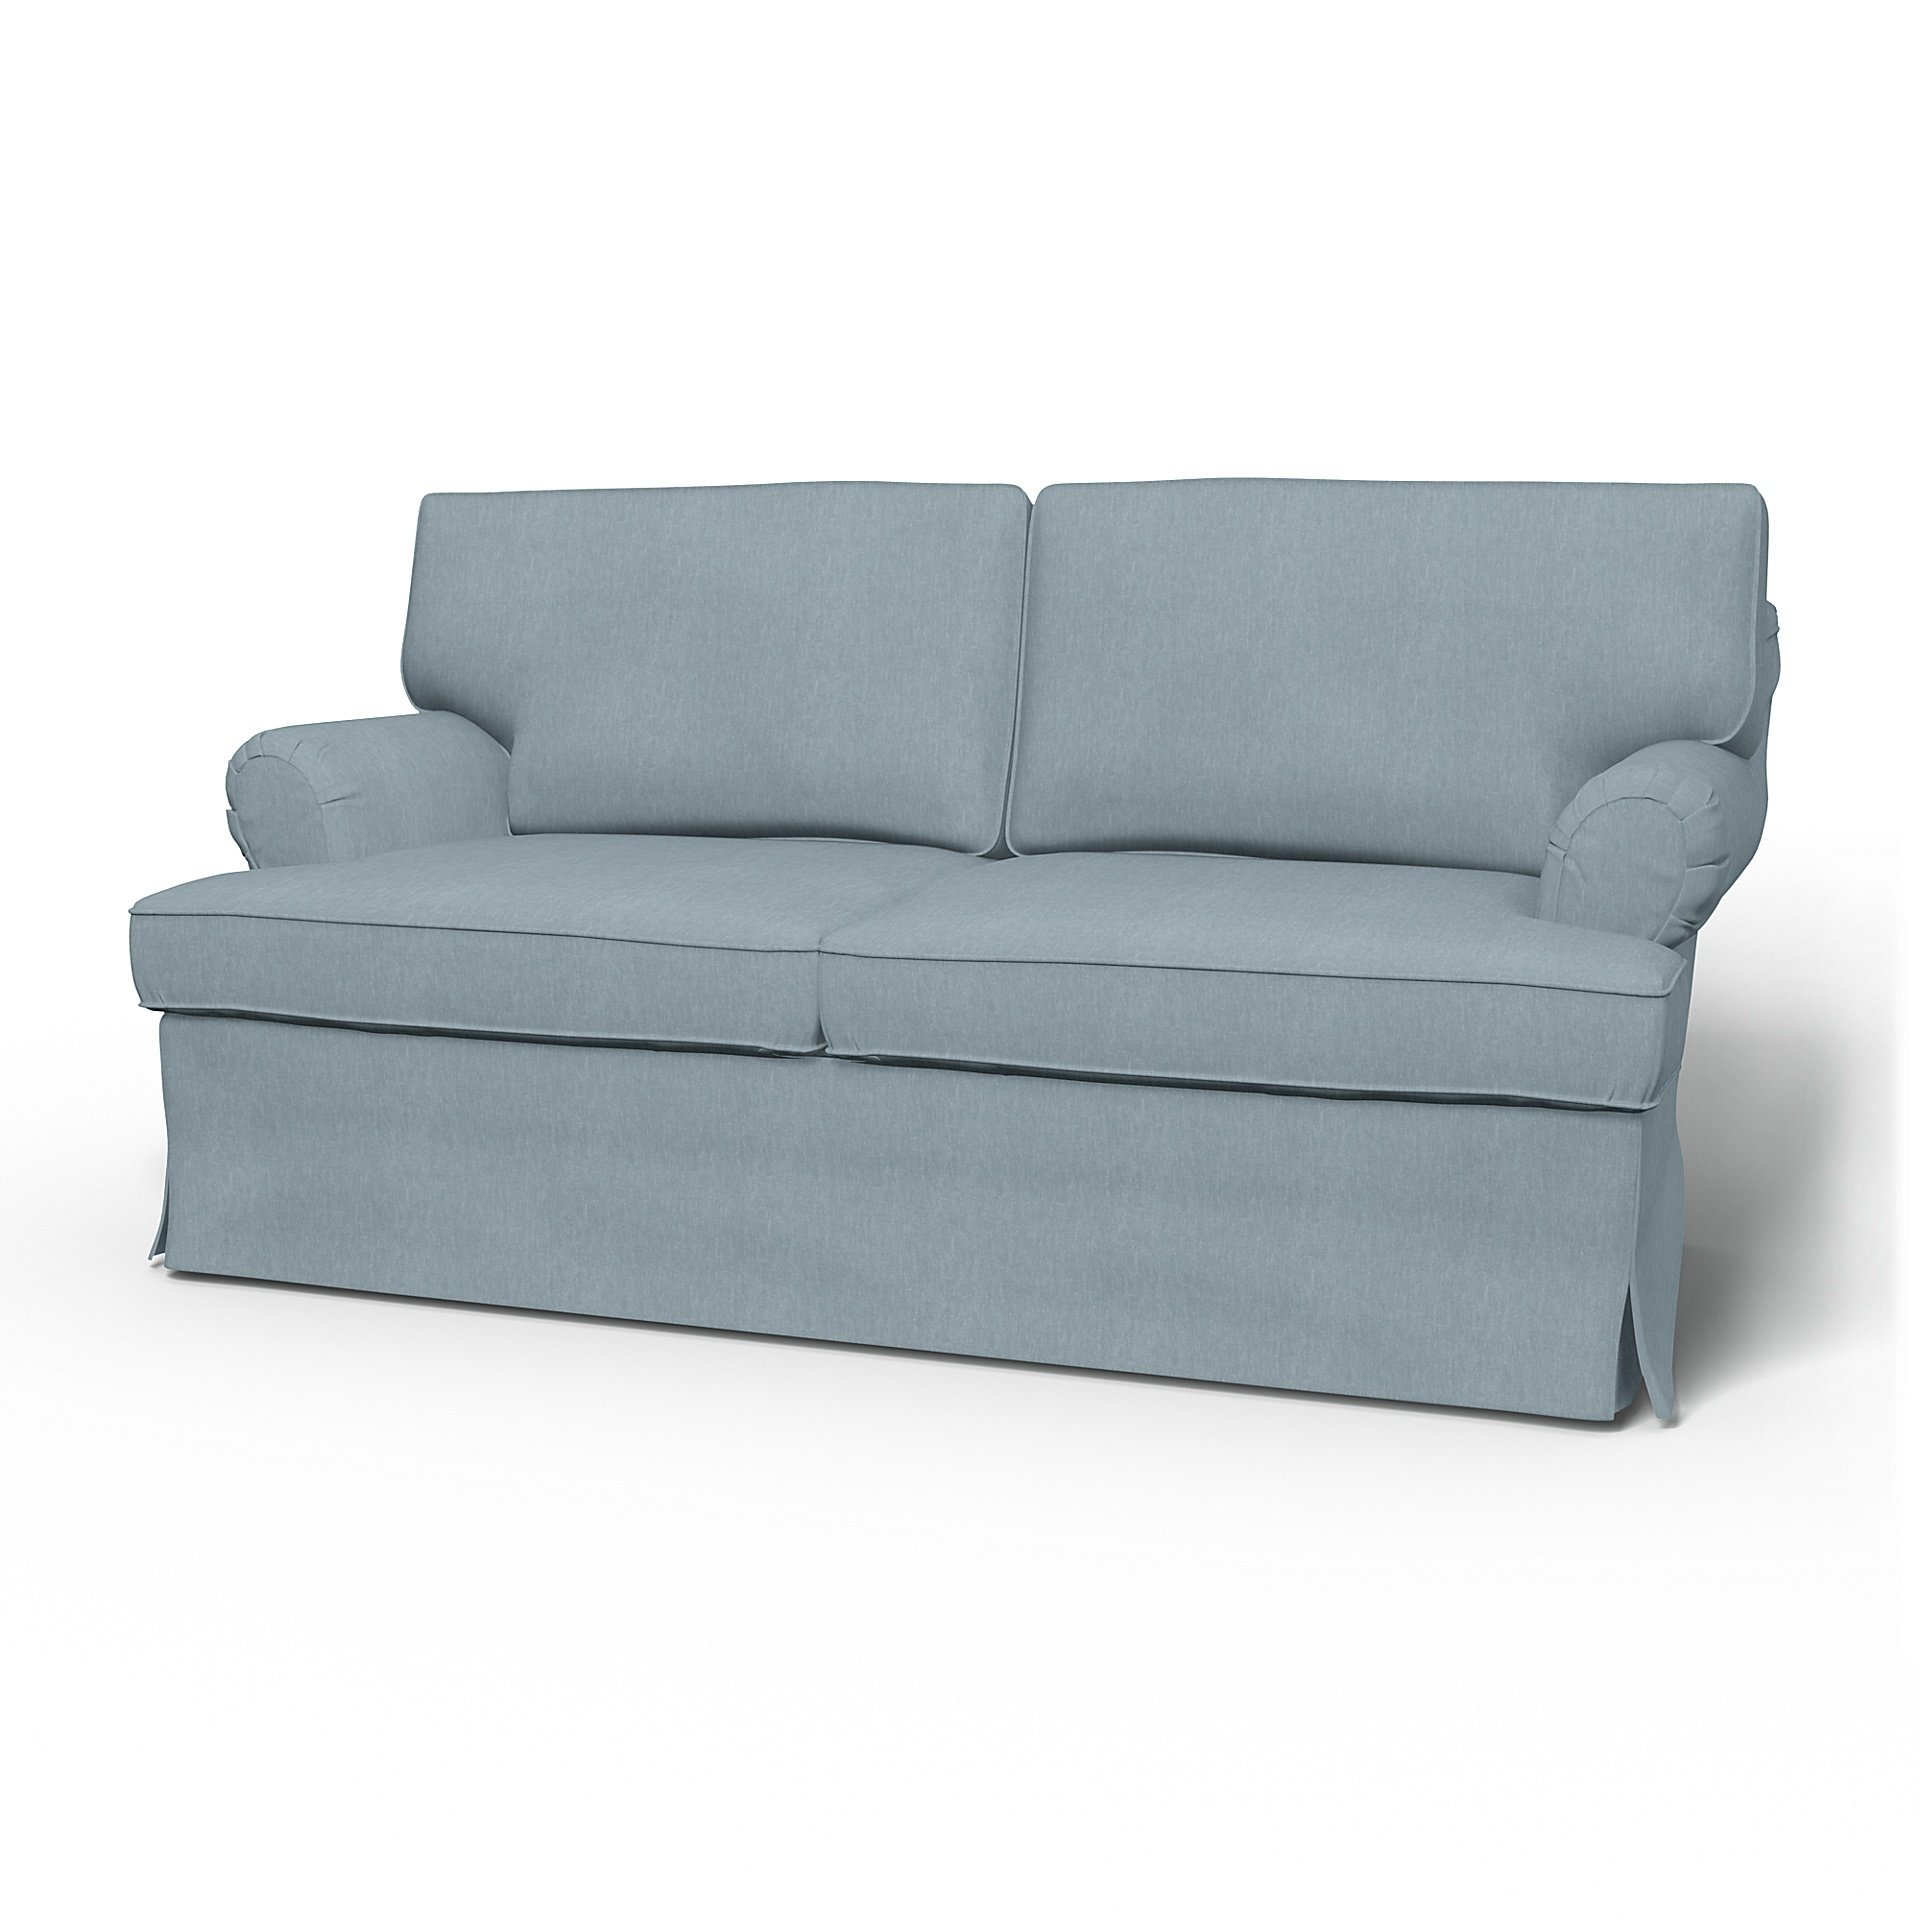 IKEA - Stockholm 2 Seater Sofa Cover (1994-2000), Dusty Blue, Linen - Bemz